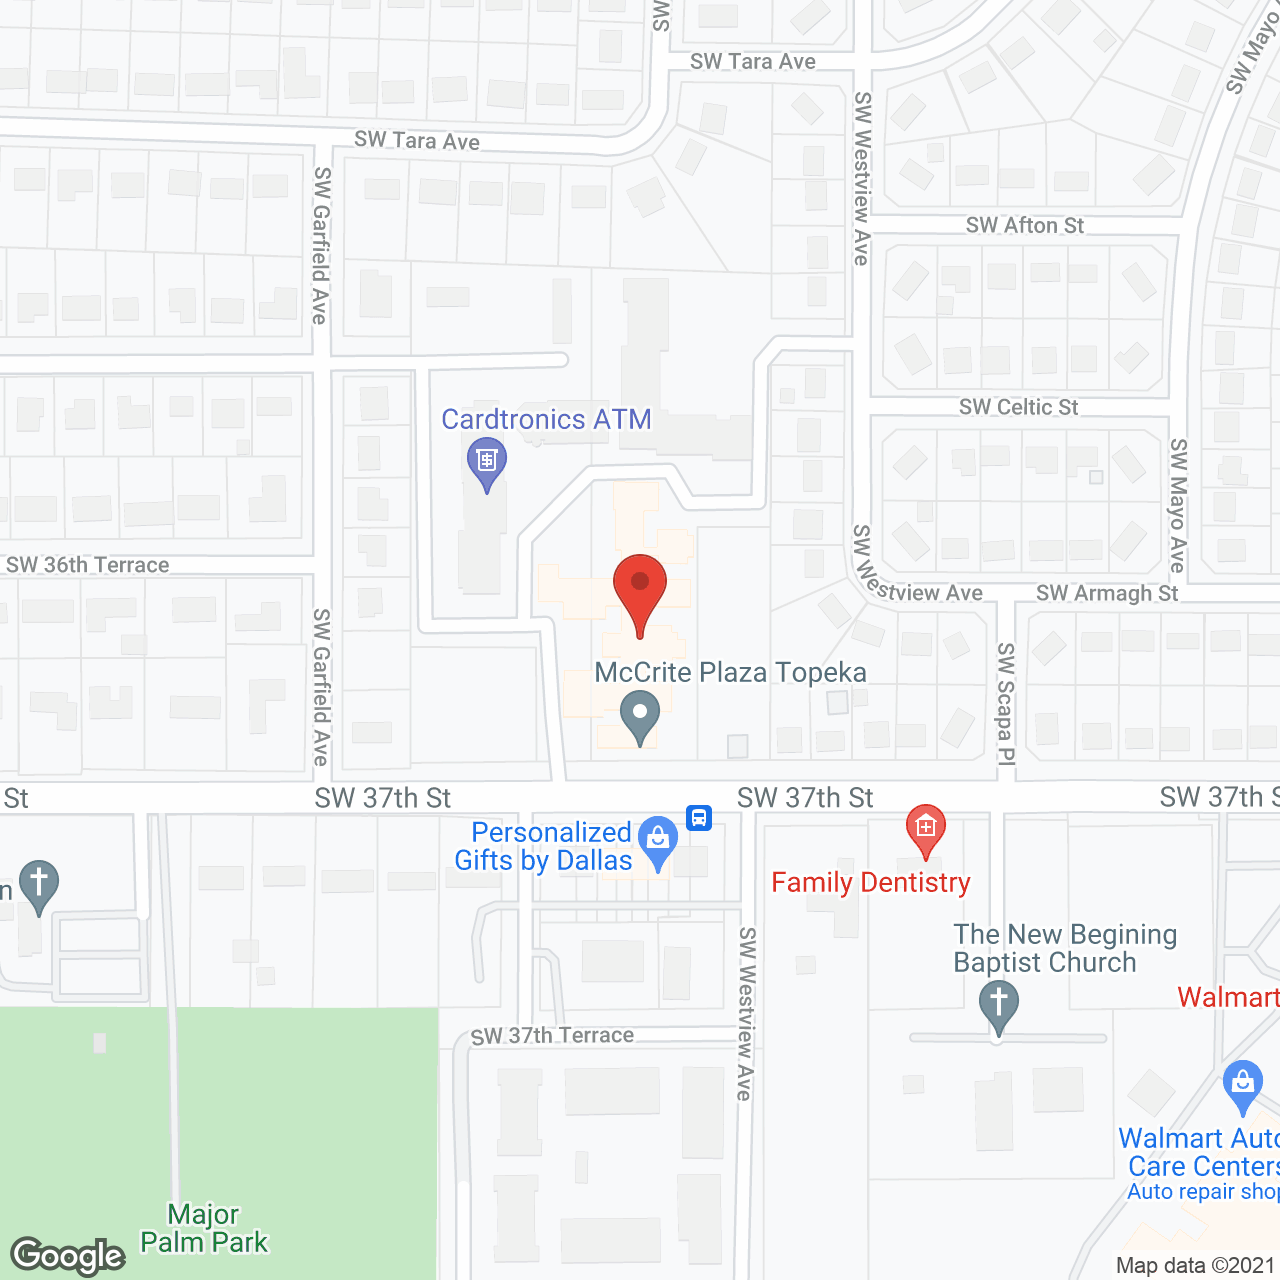 McCrite Plaza Topeka in google map